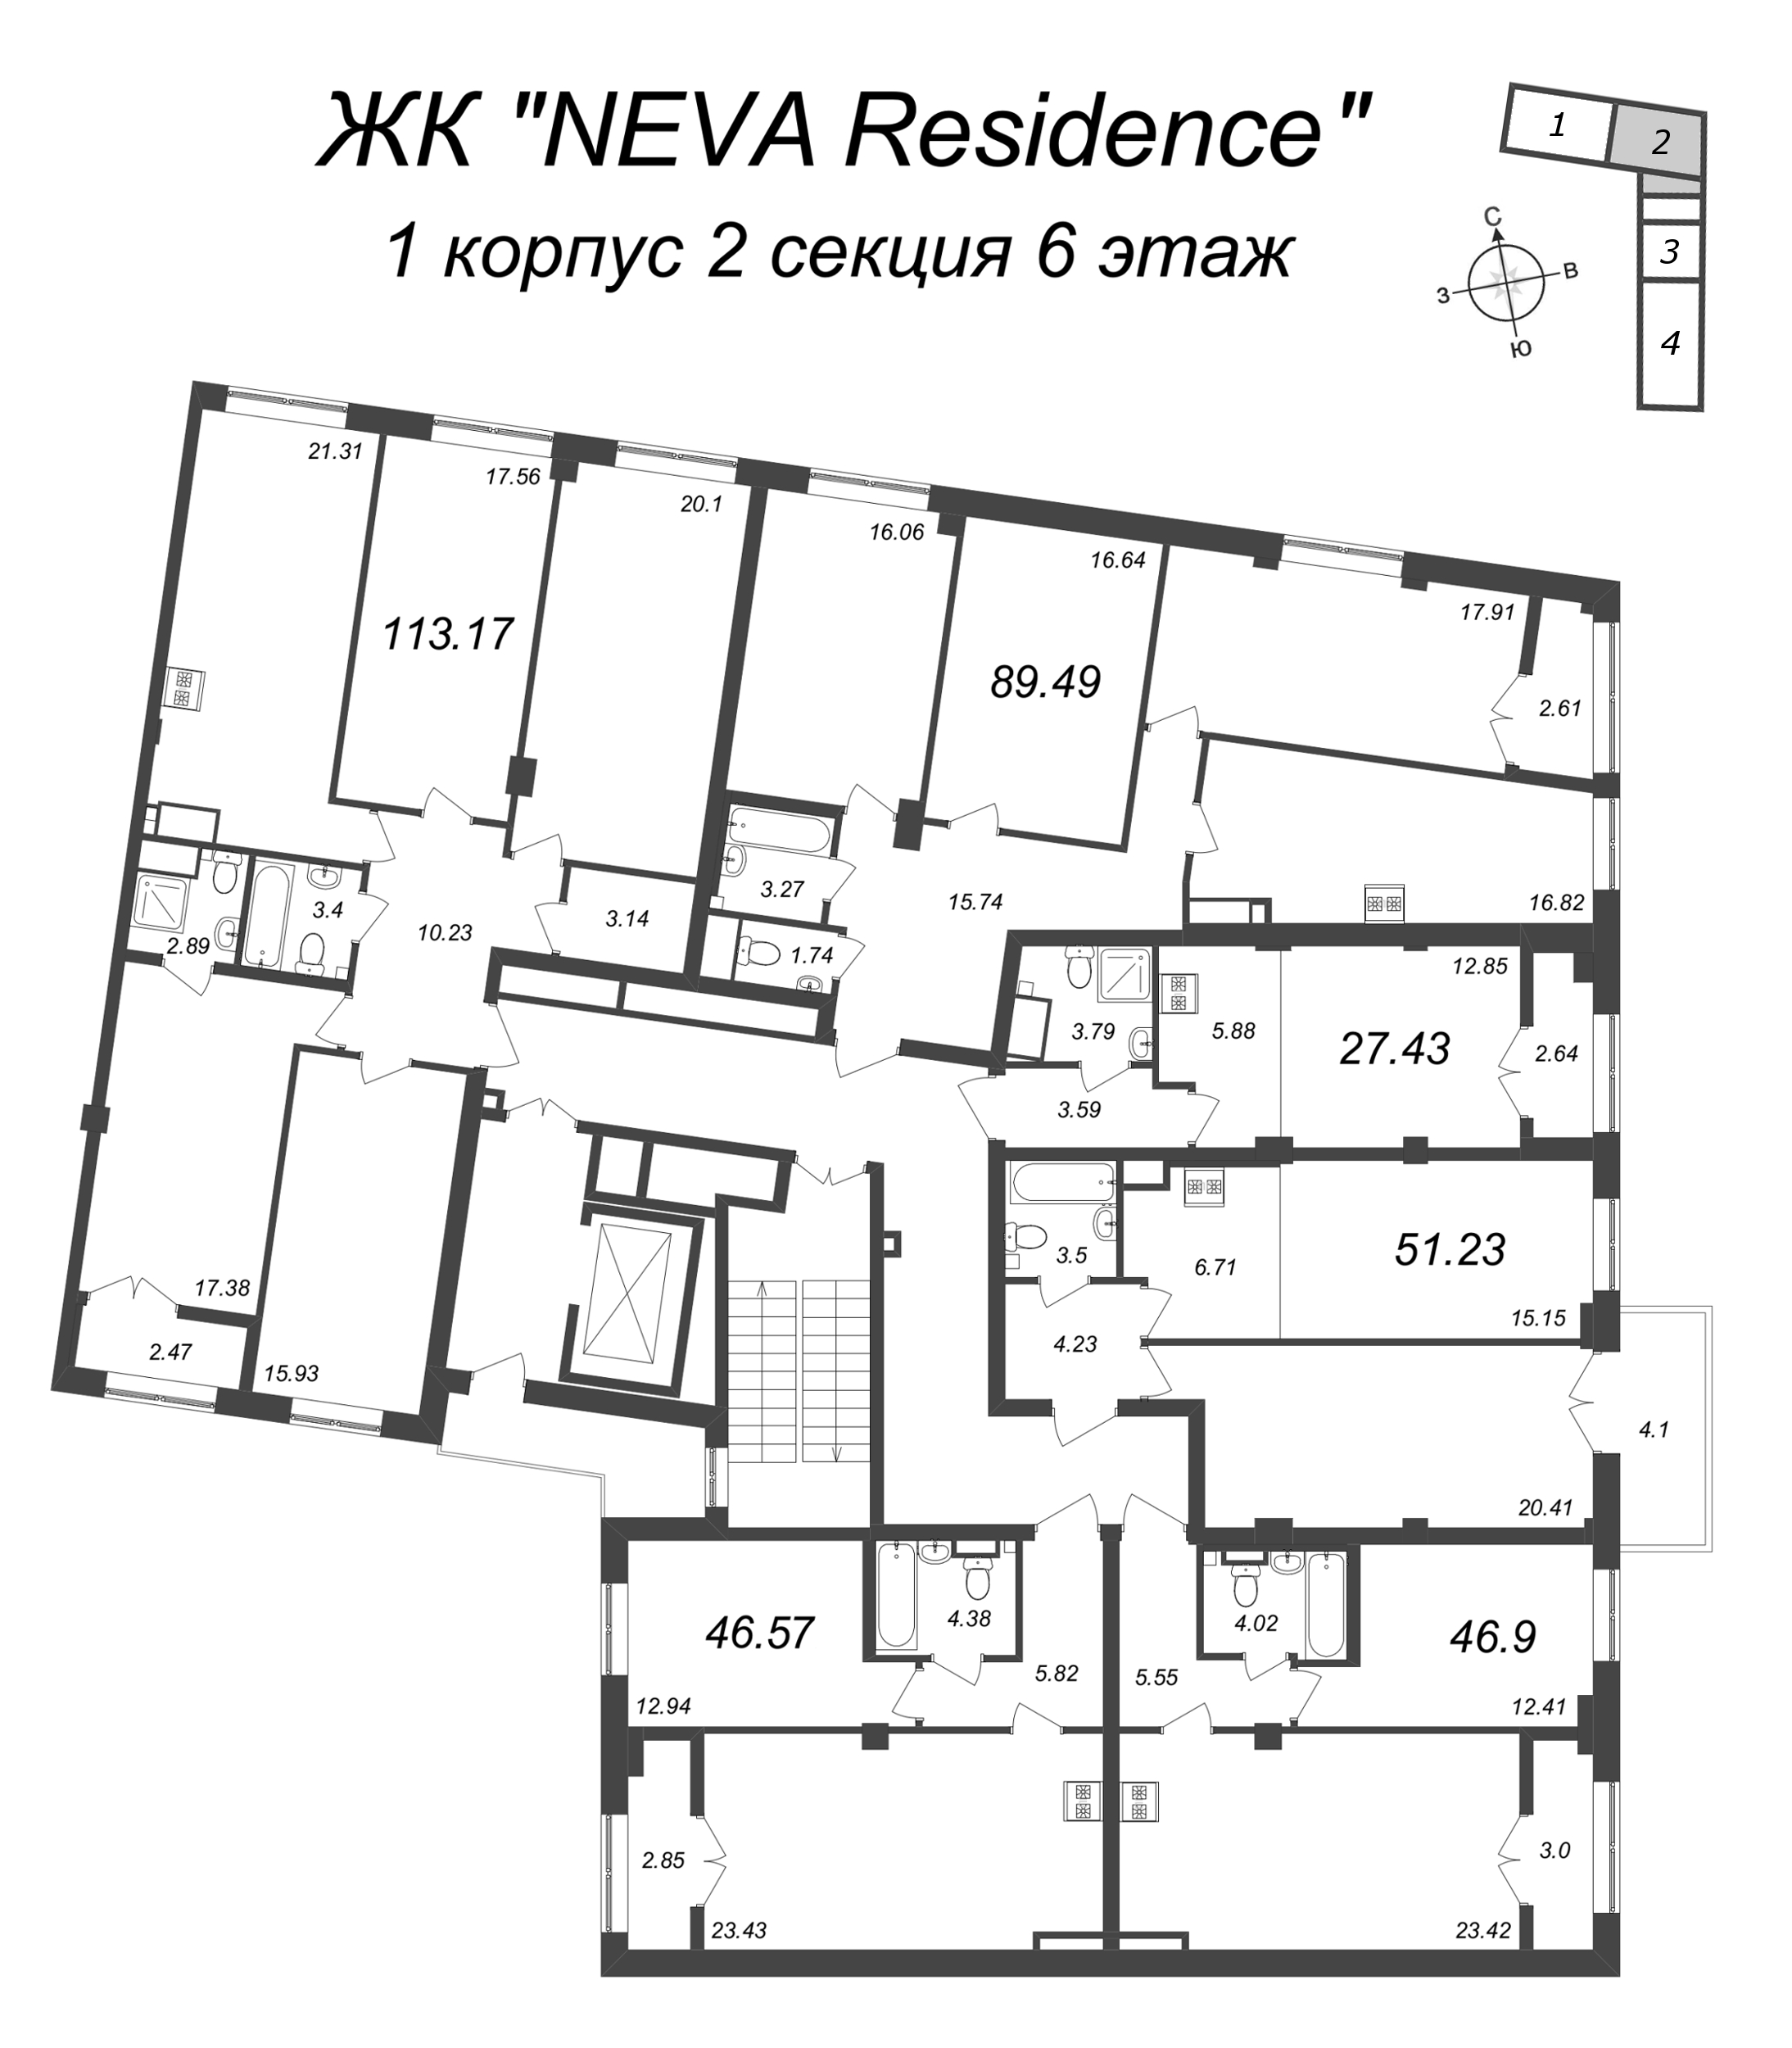 5-комнатная (Евро) квартира, 113.17 м² - планировка этажа